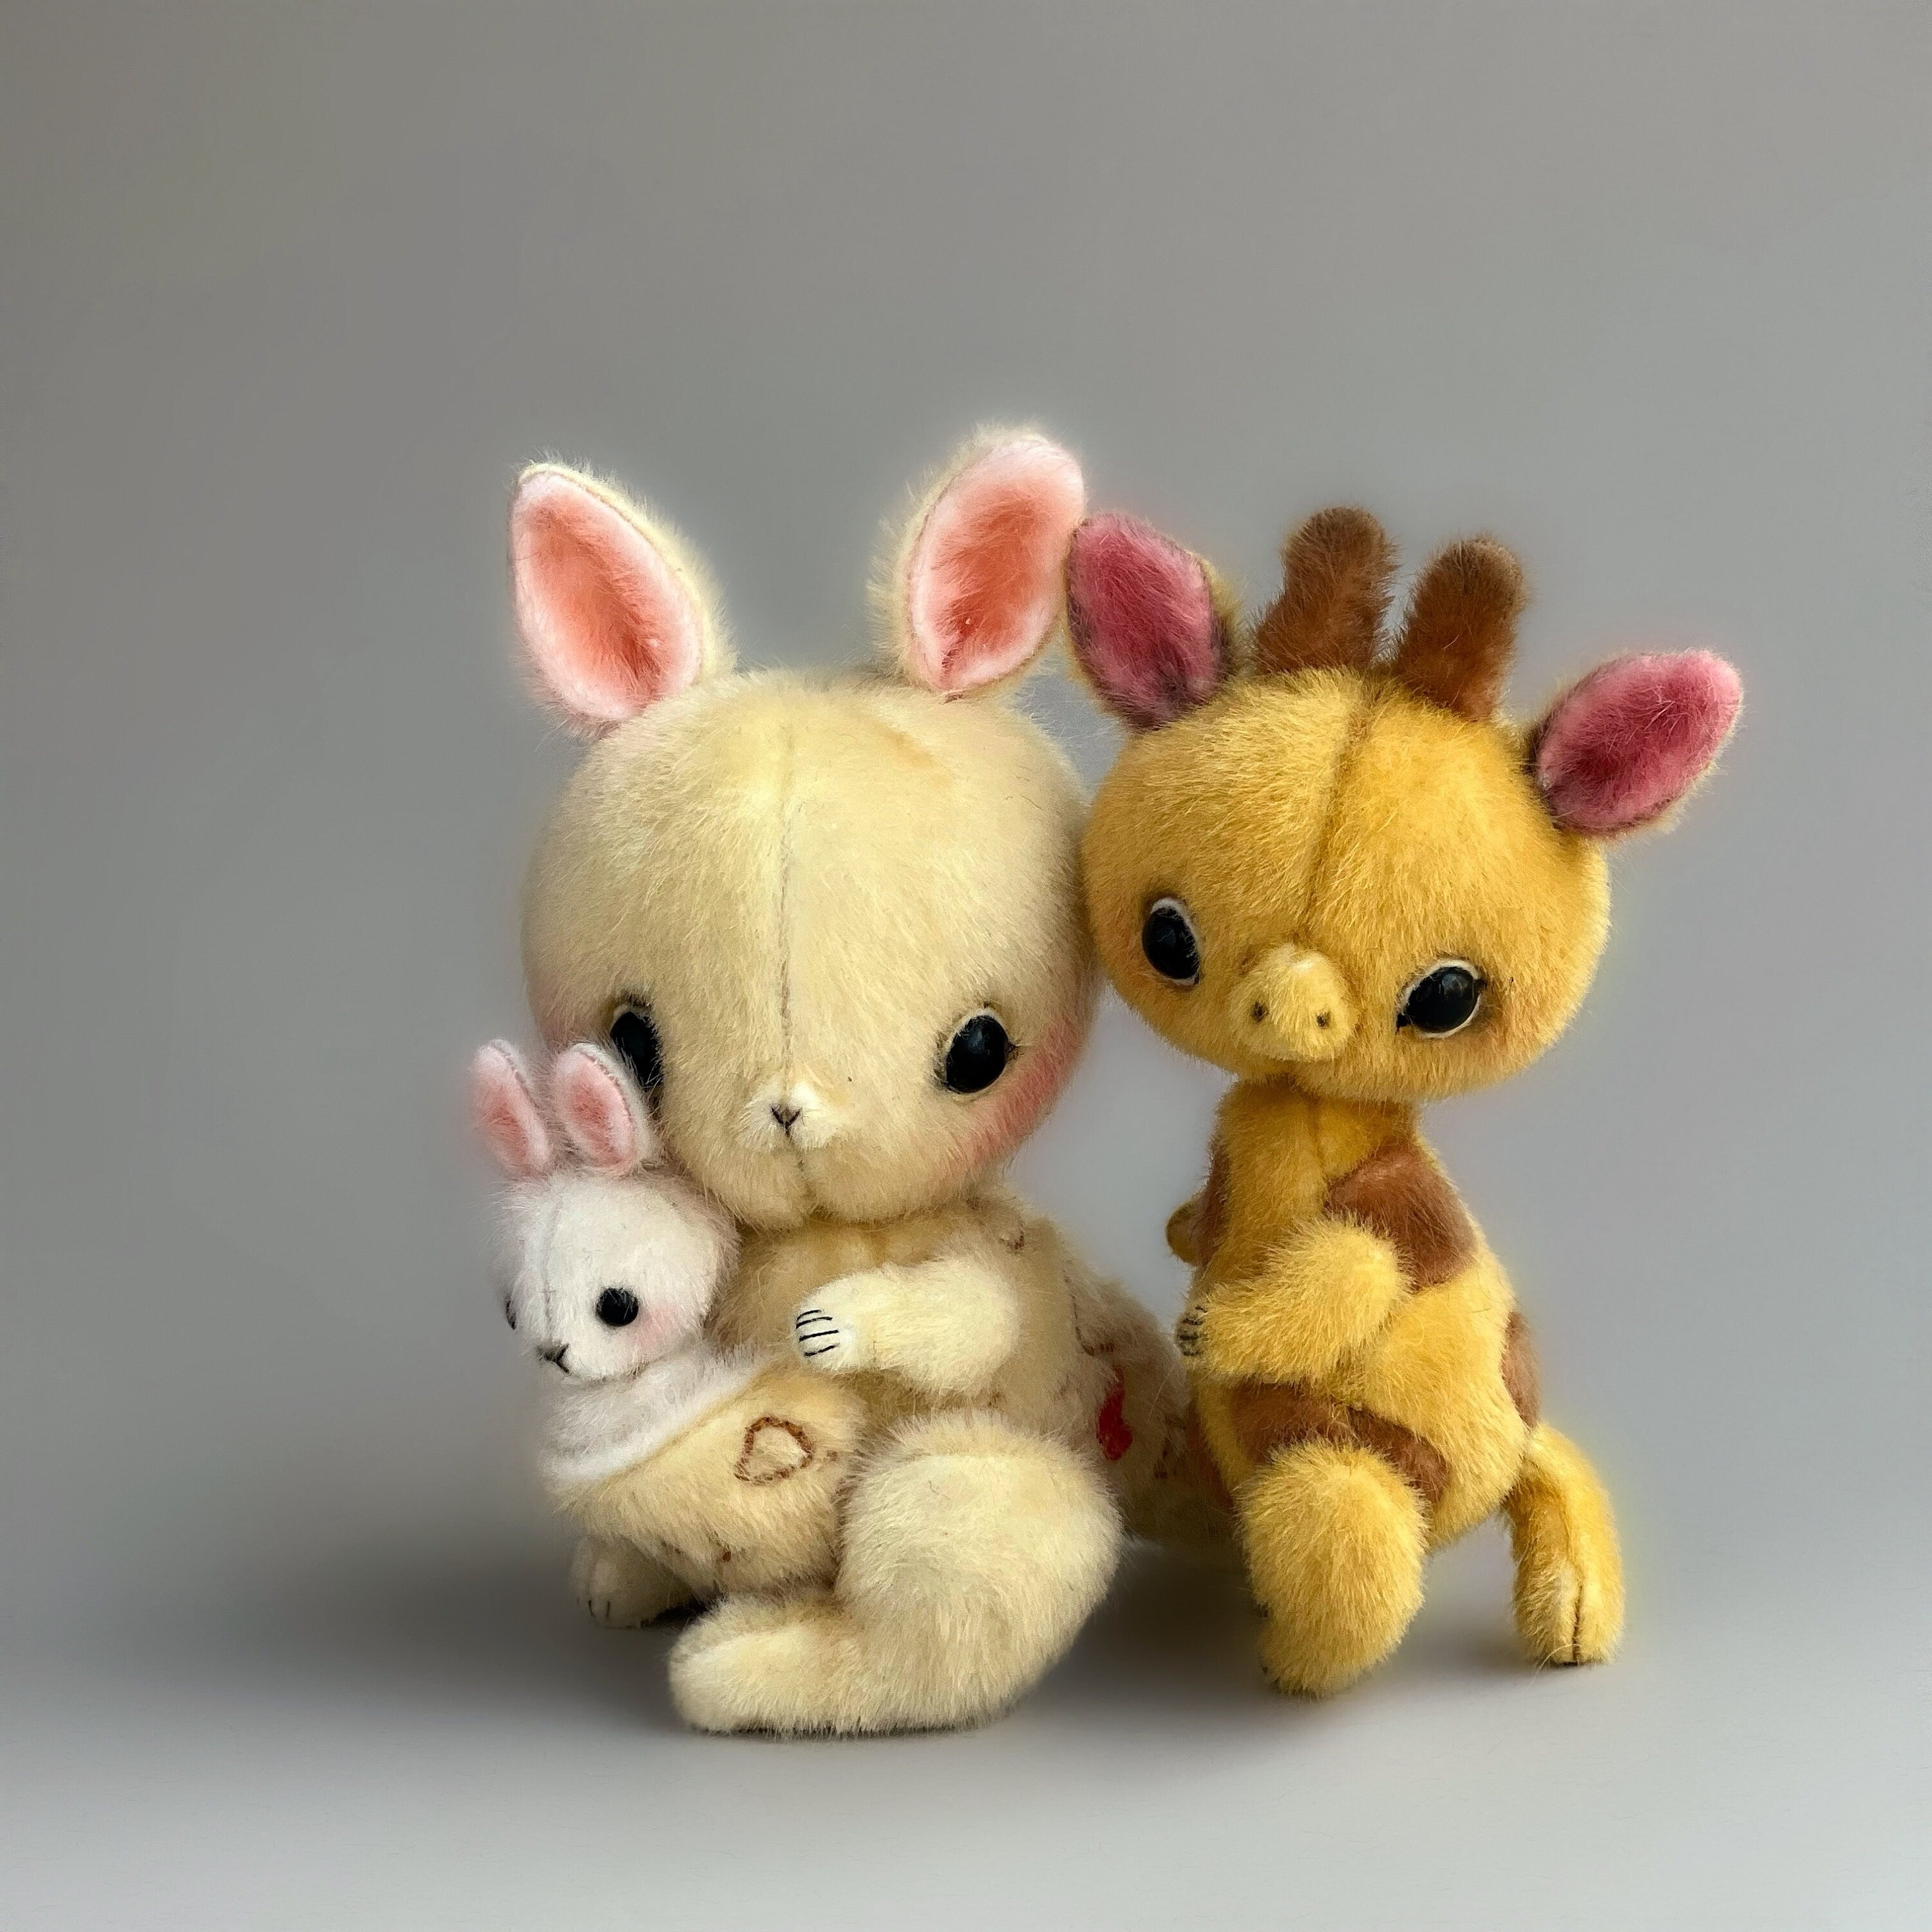 Kangaroo - PDF sewing pattern, artist pattern, stuffed toy tutorials, soft animal, soft toy diy craft kit for adults gift by TSminibears